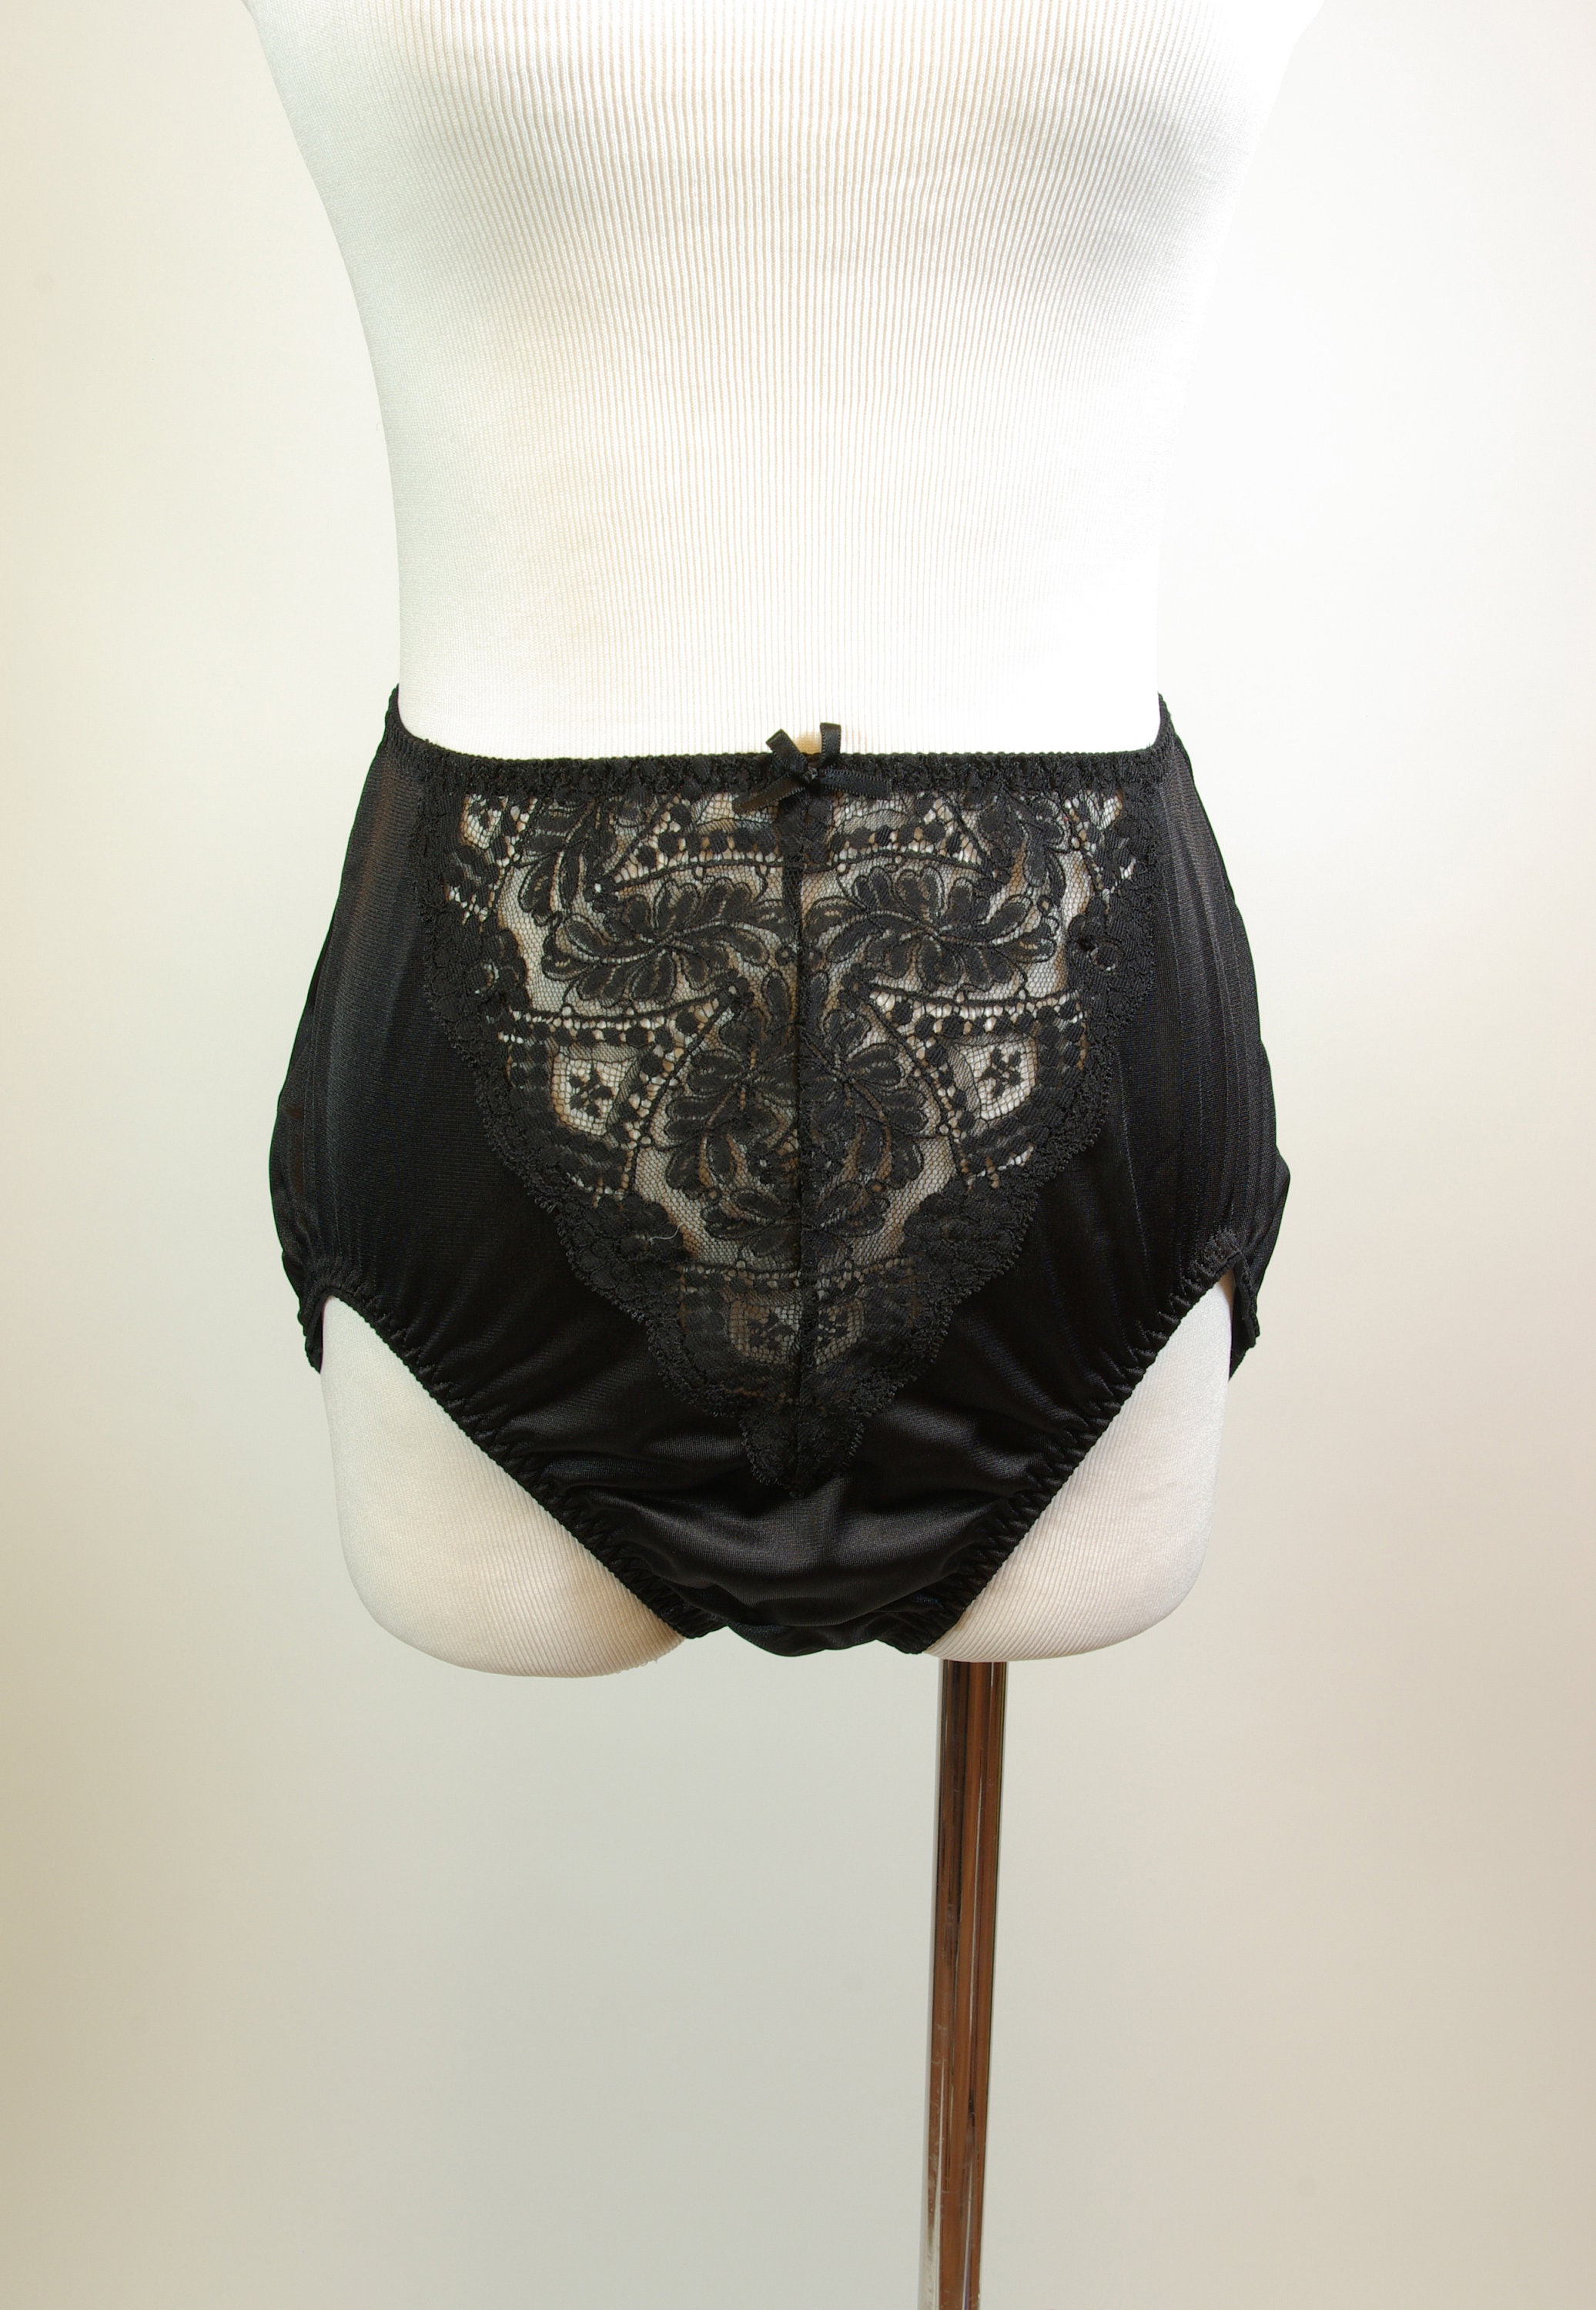 Lacy Black Silky Panties Vassarette Label Women's High Waist Undies 